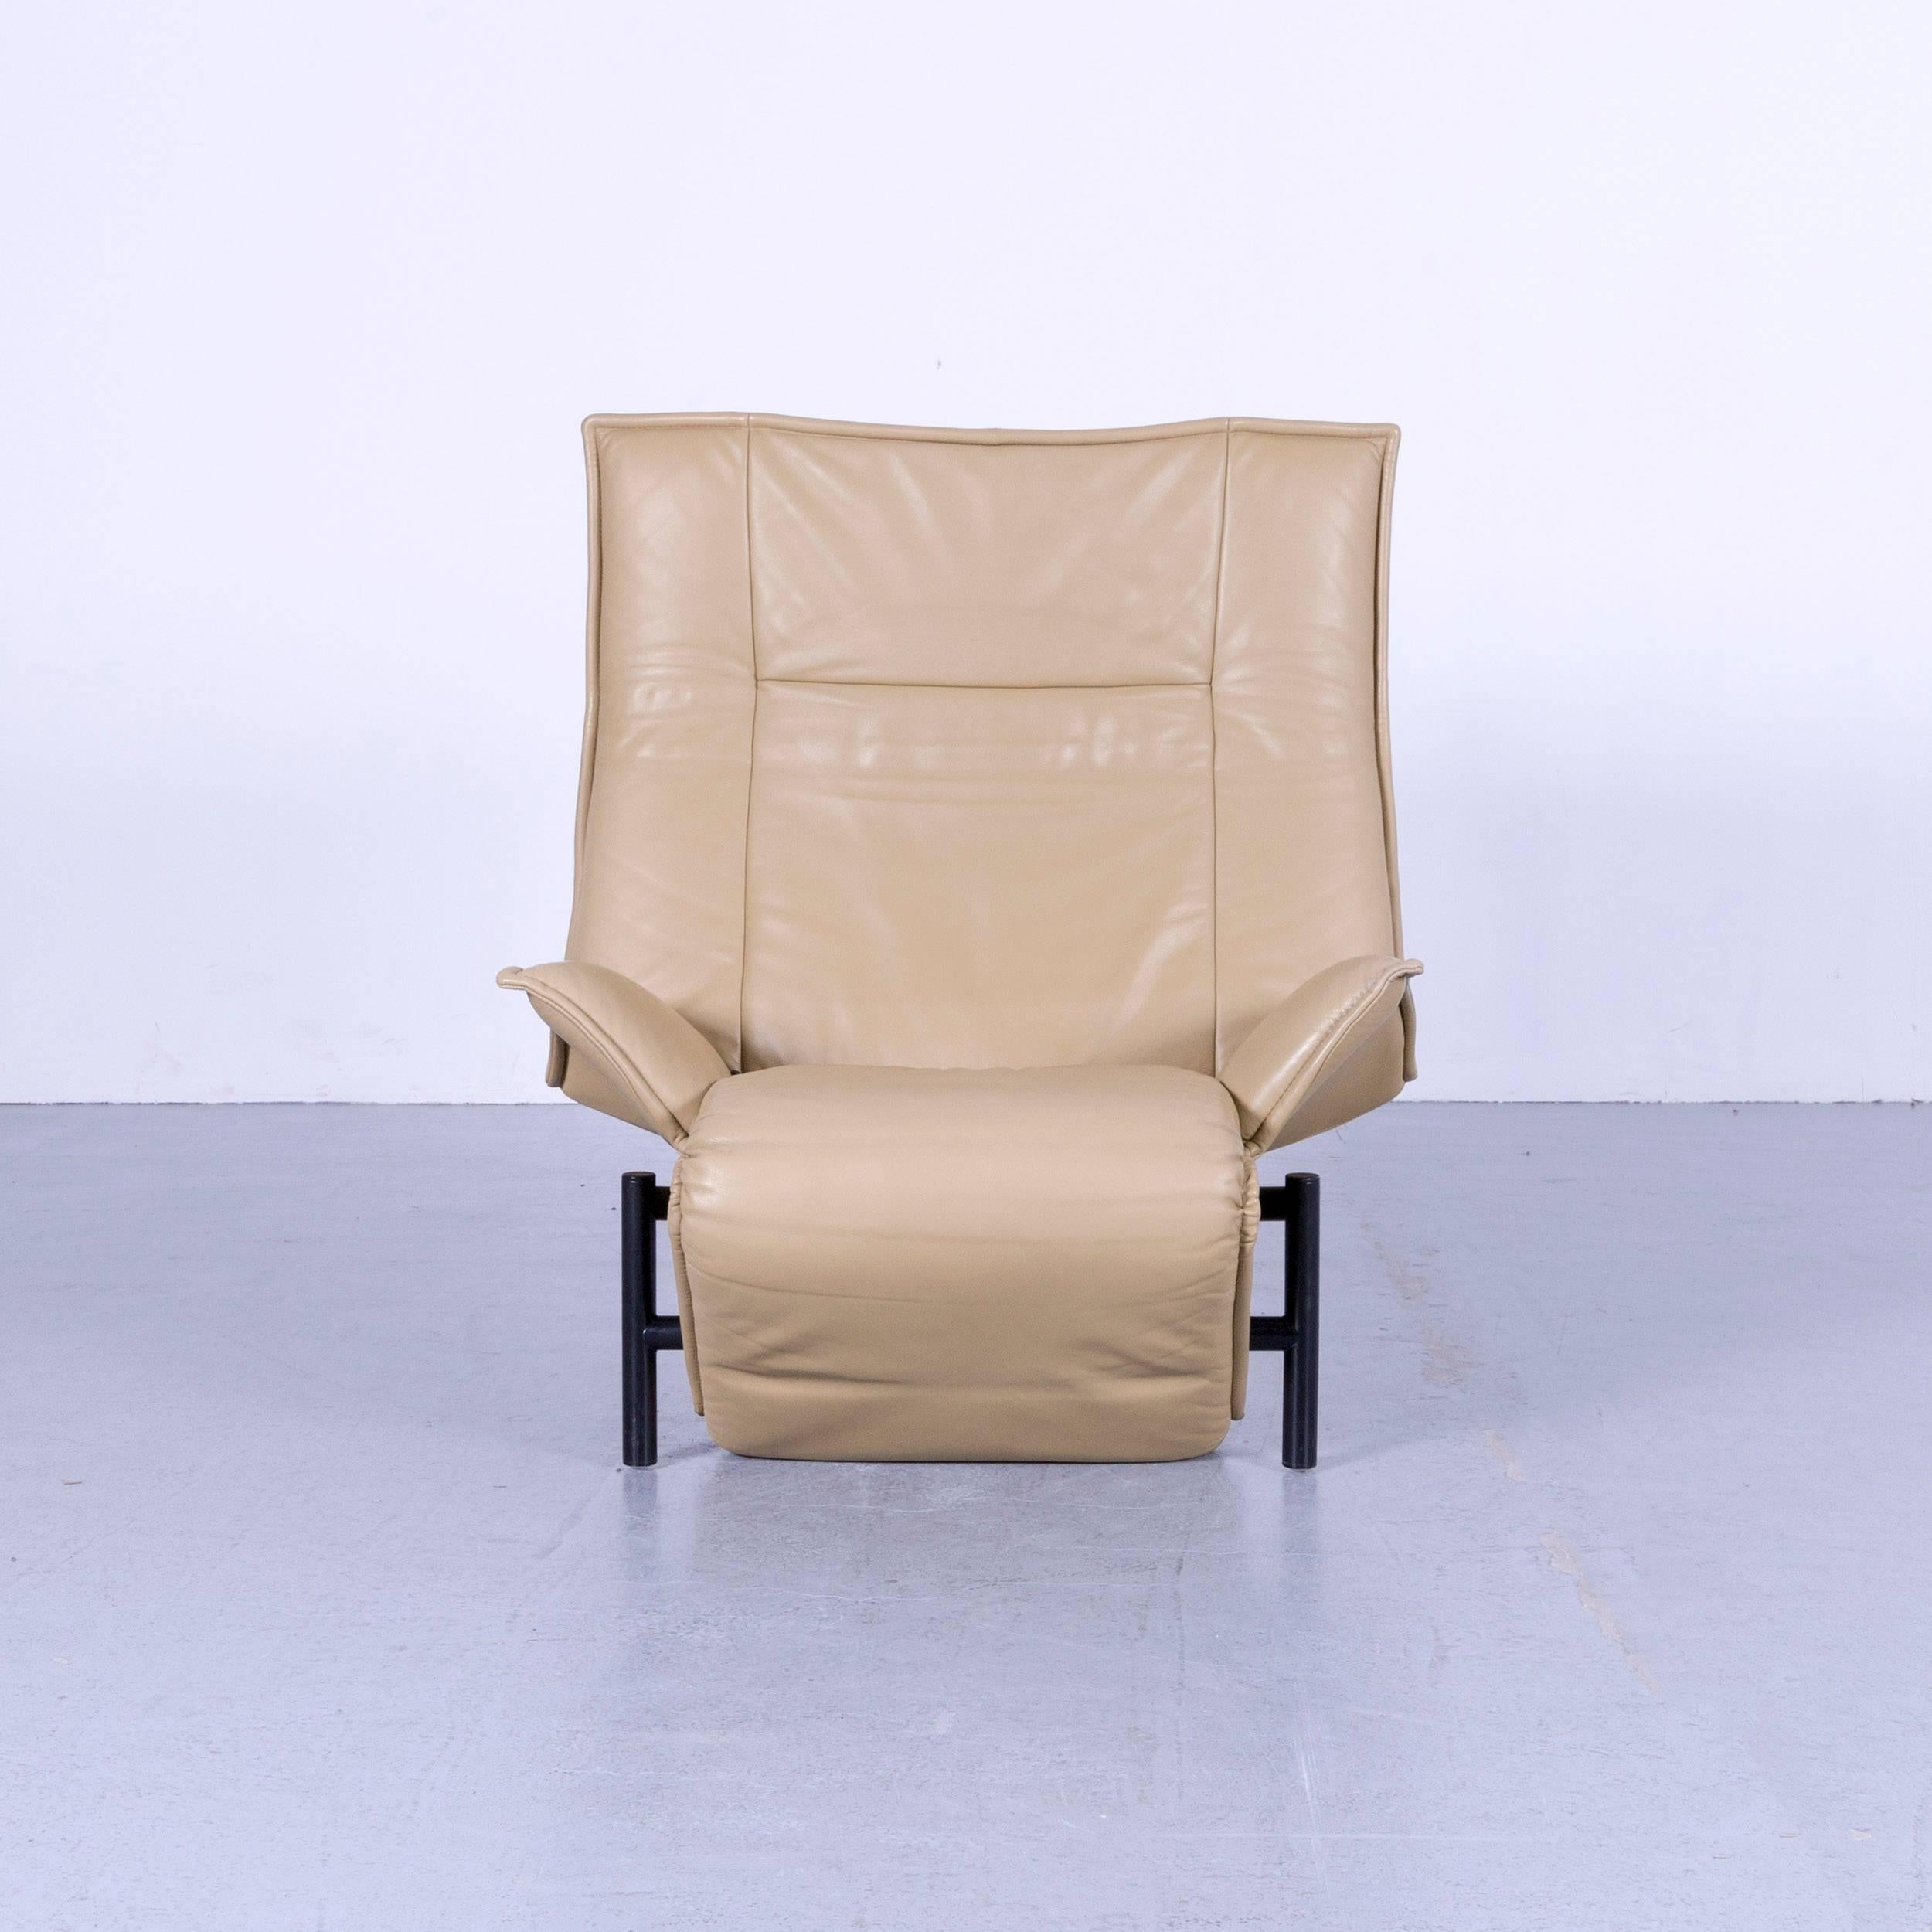 Dutch Cassina Veranda Designer Leather Armchair in Olive Beige with Recliner Function